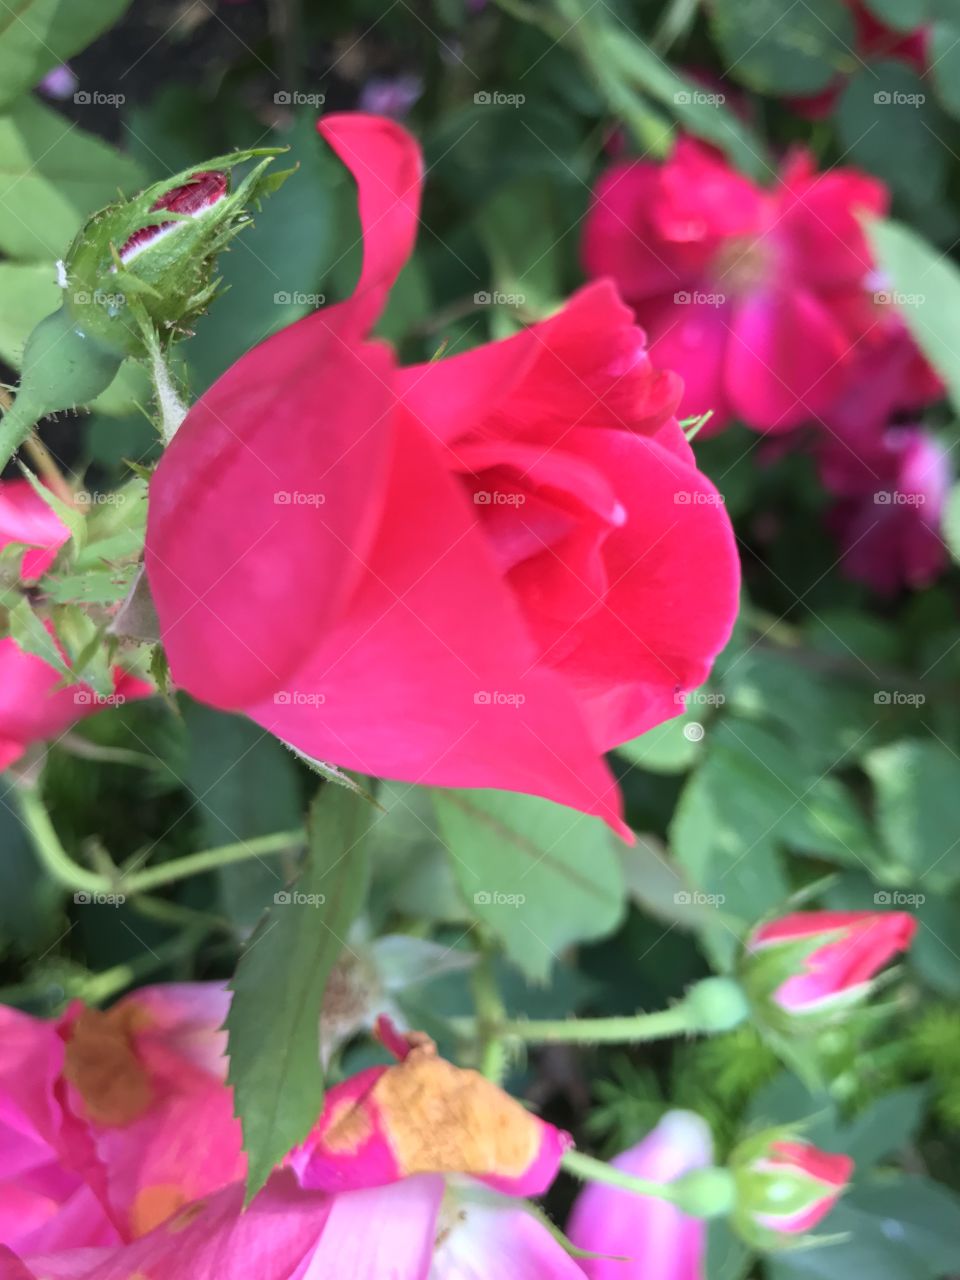 Electrifying bright pink rose